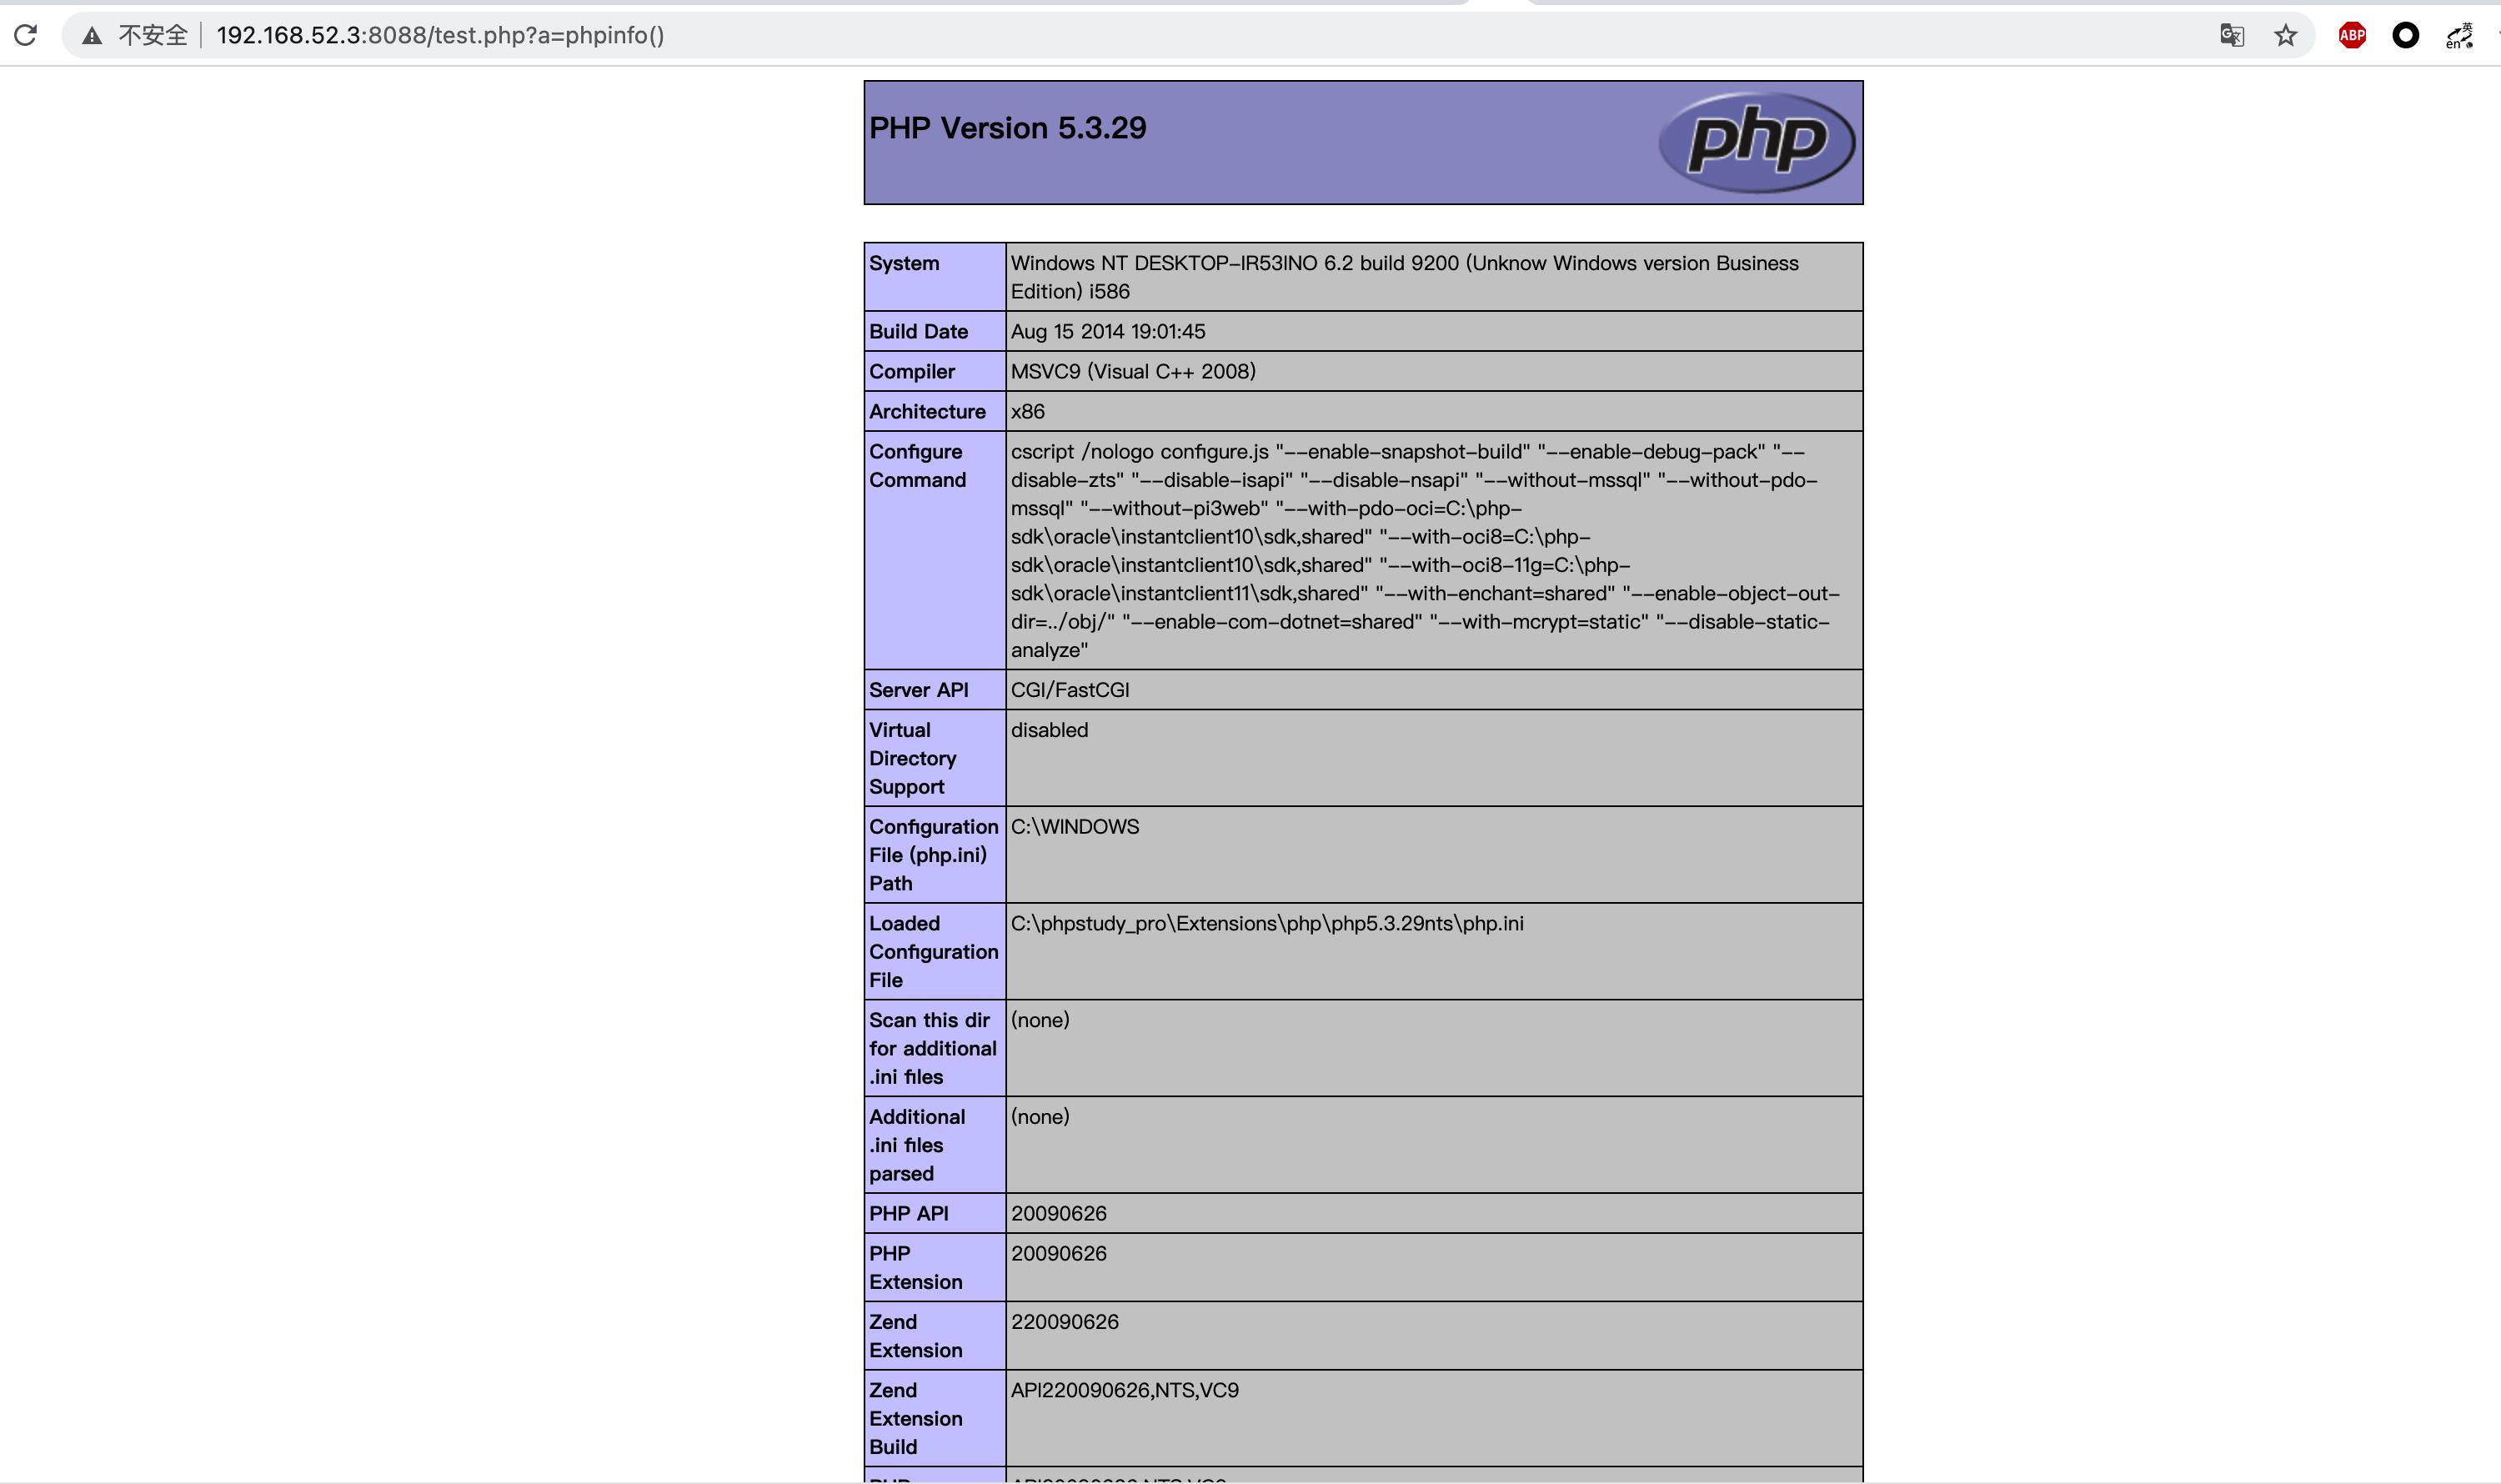 PhpMyAdmin 4.6.2 Rce 漏洞复现&分析 - 文章图片